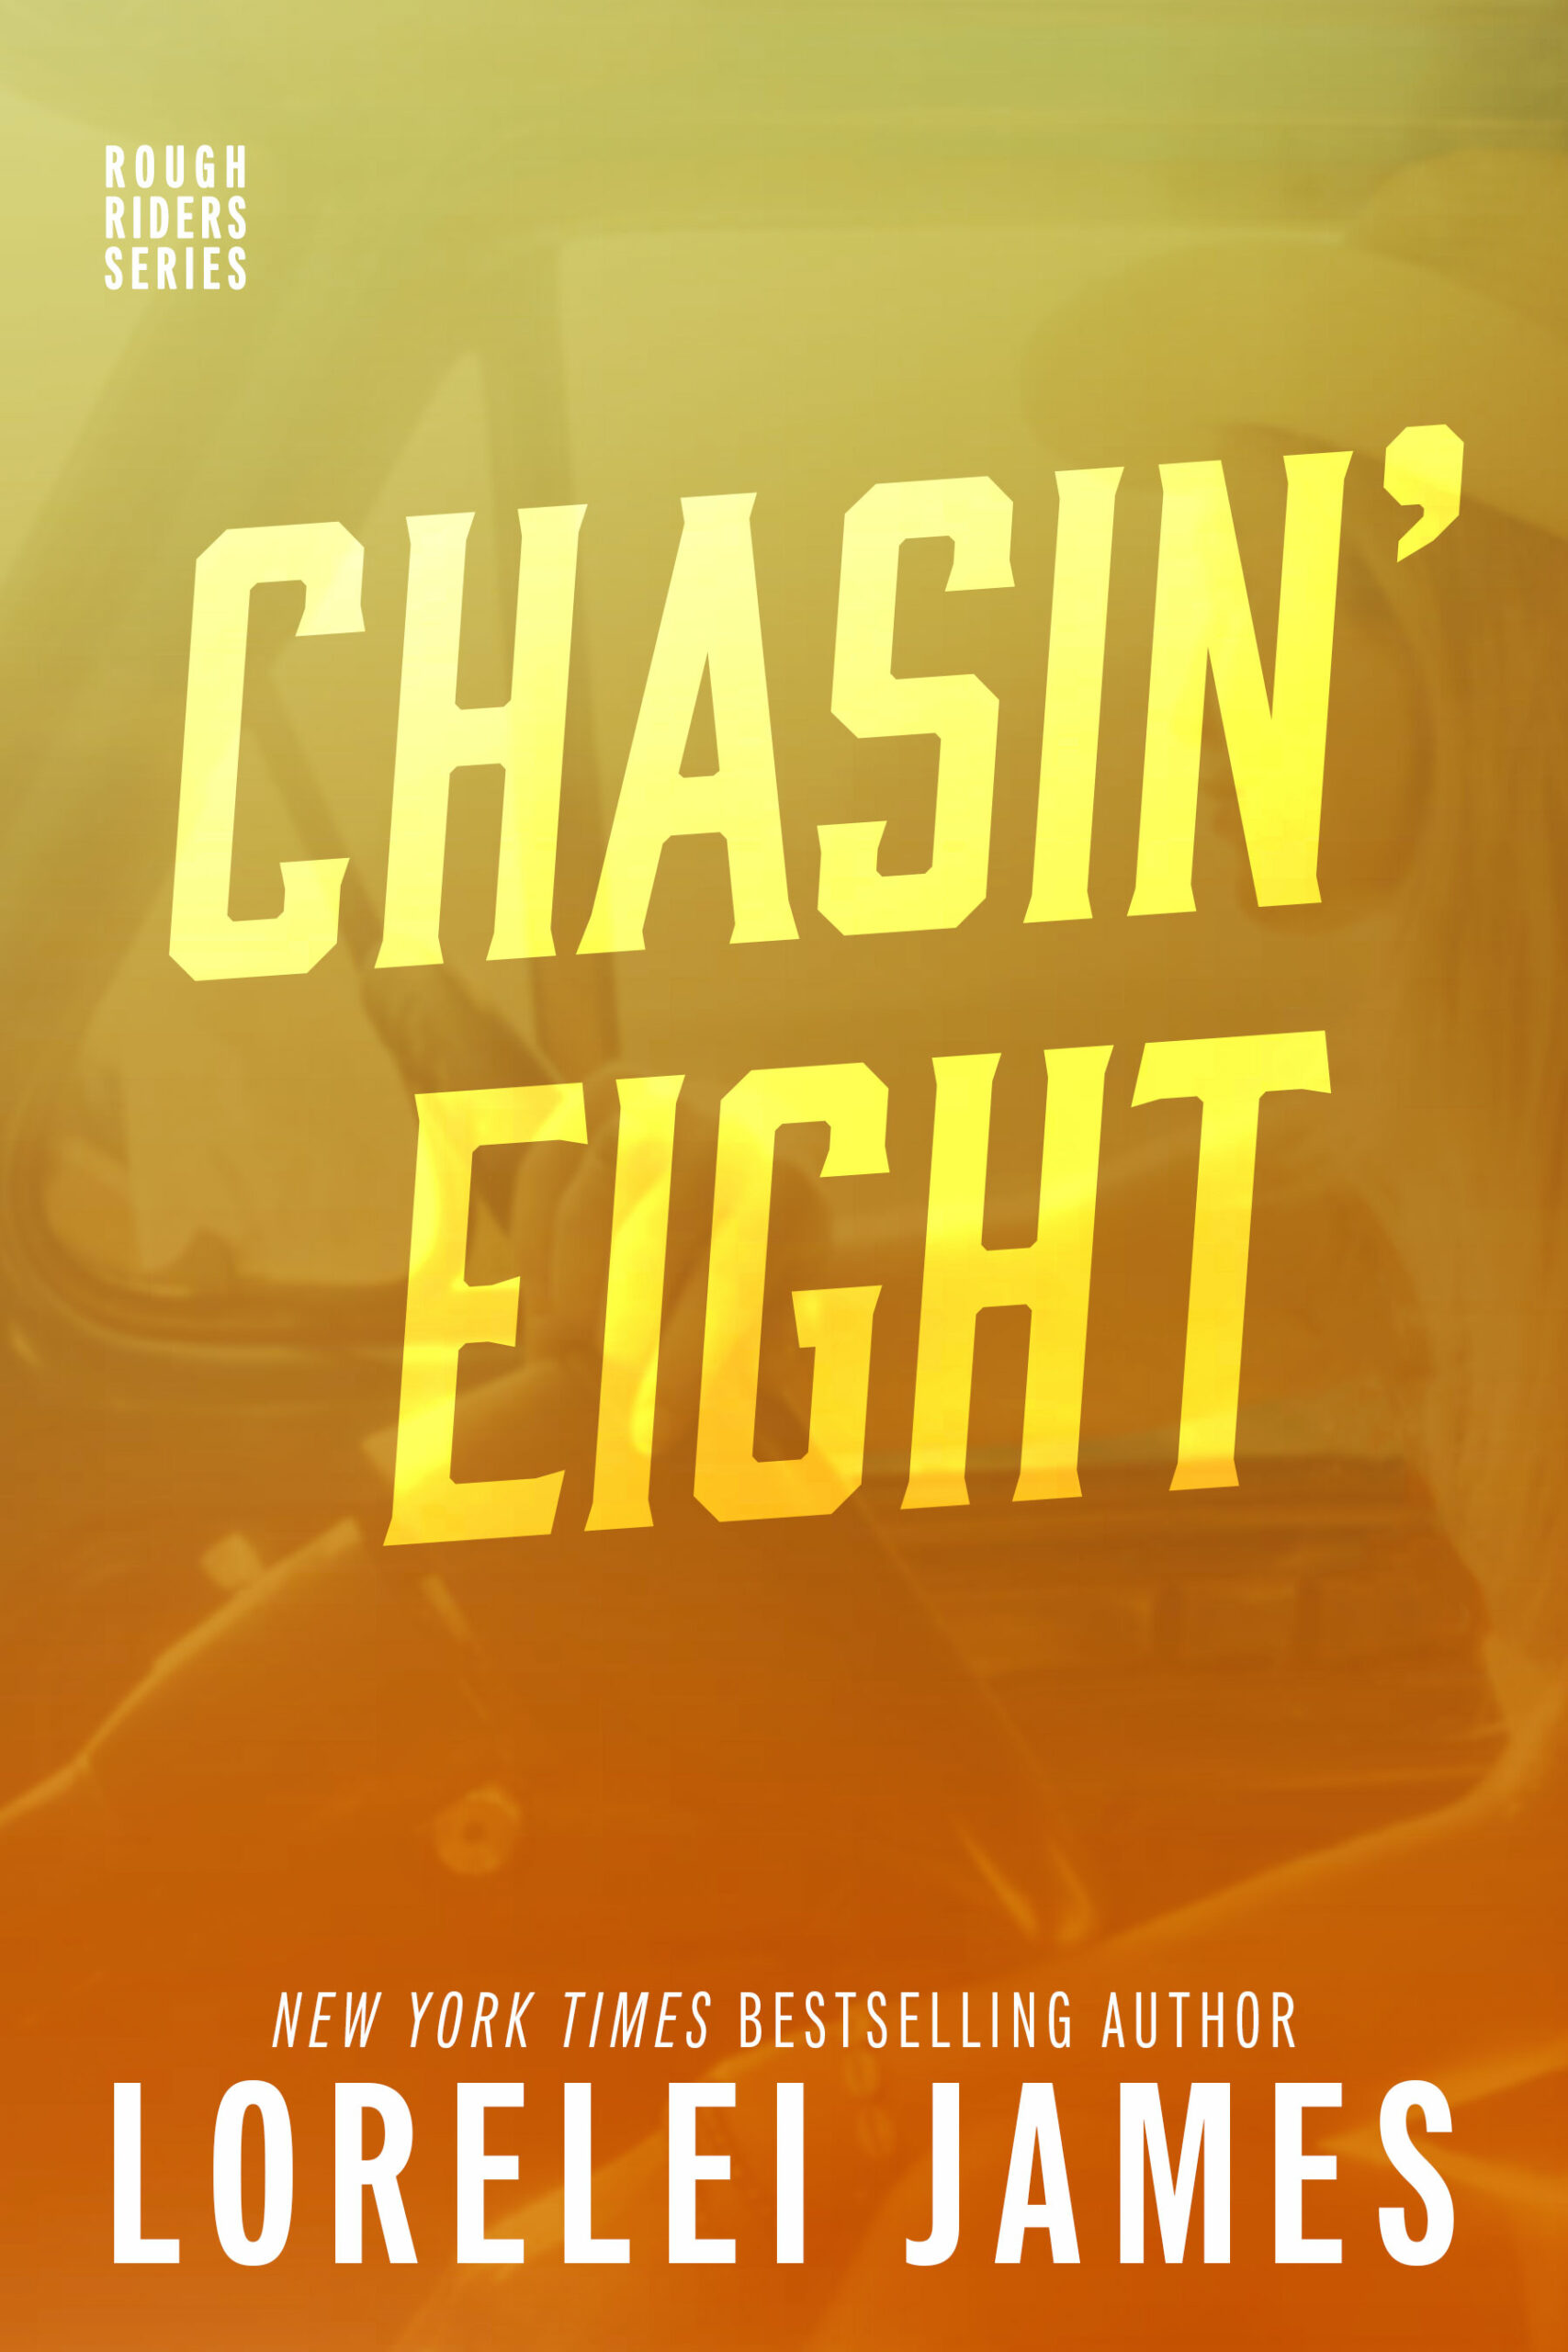 Chasin’ Eight